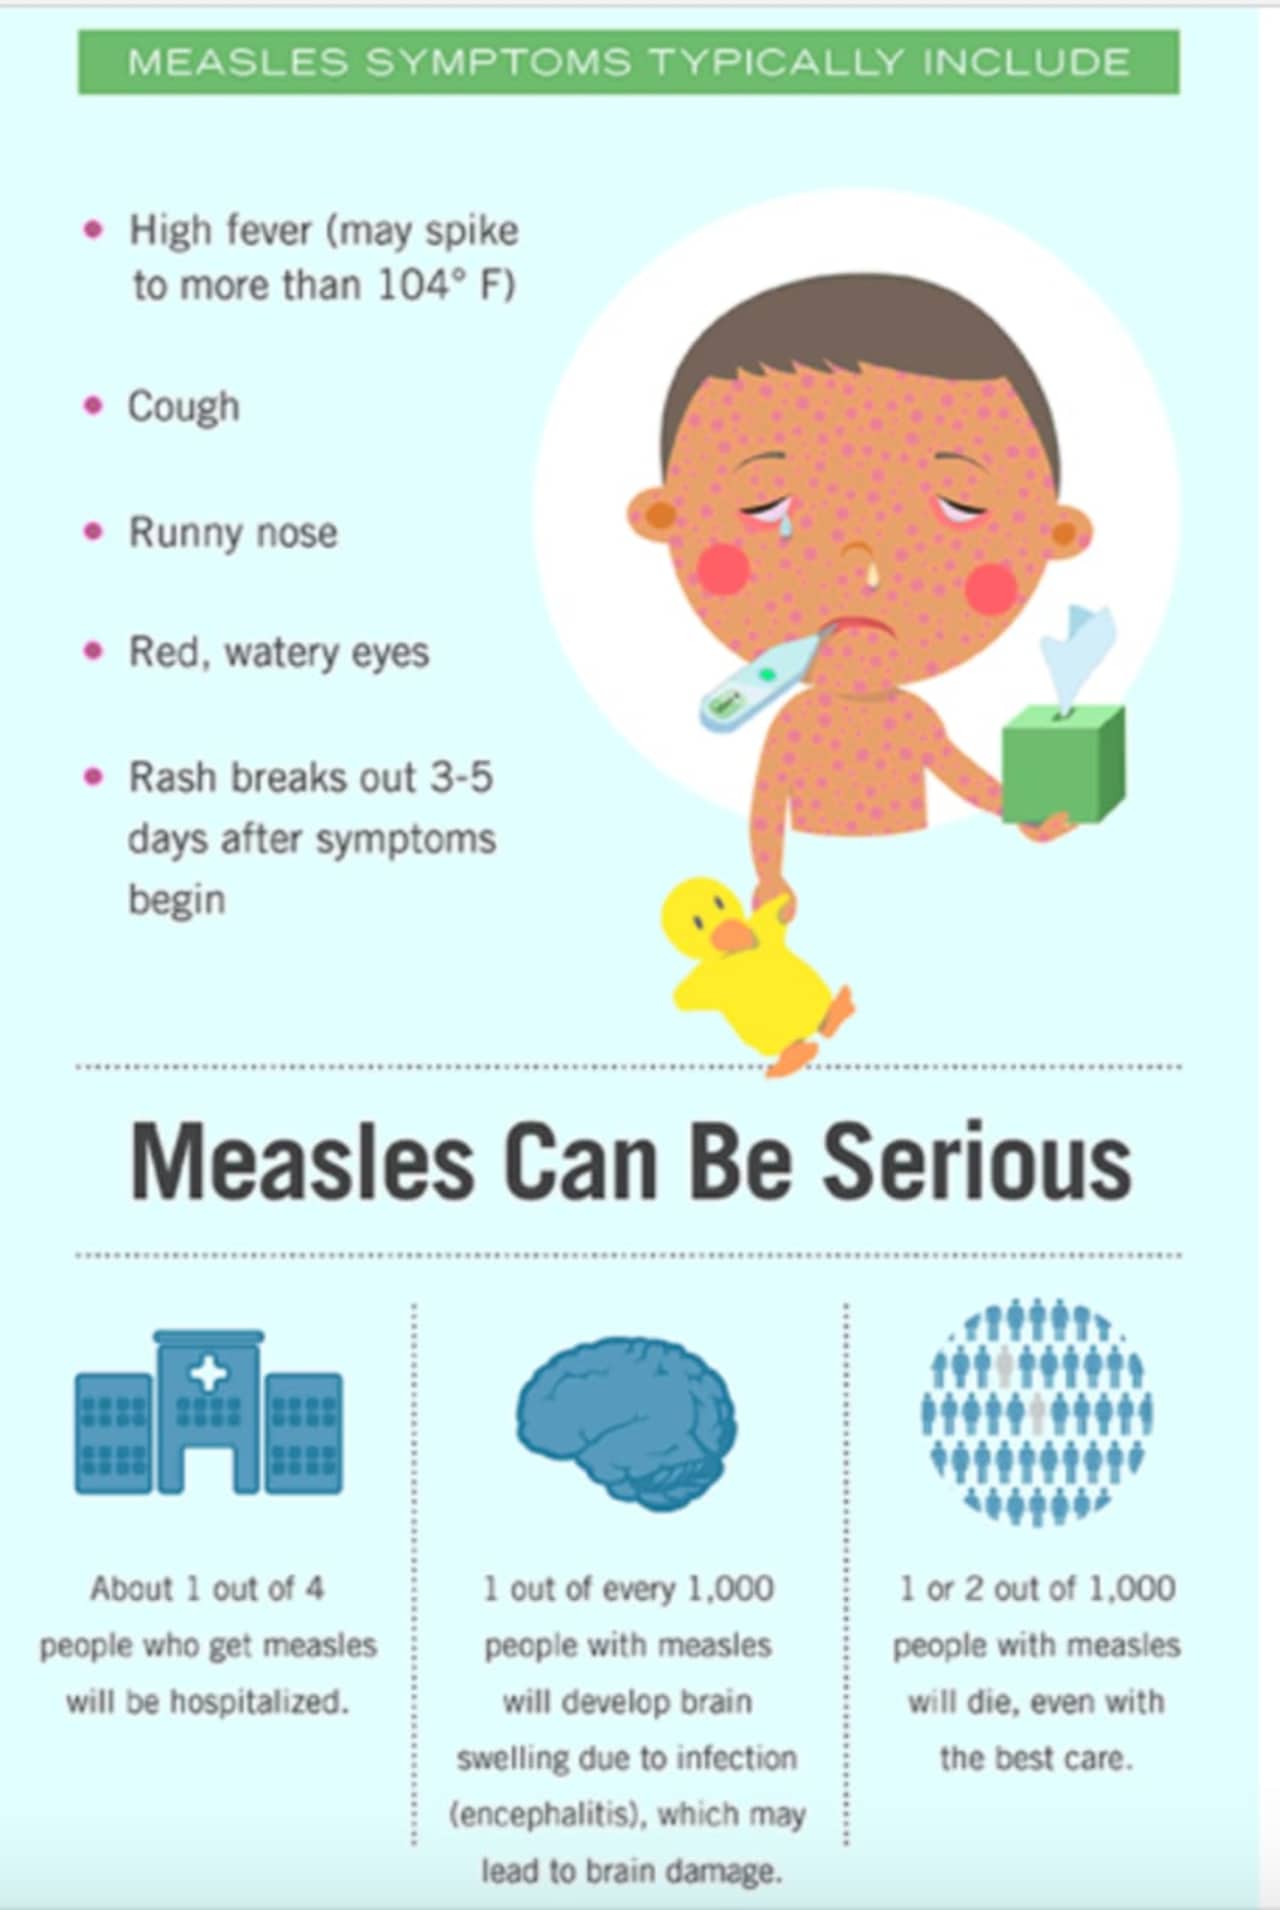 A look at measles symptoms.